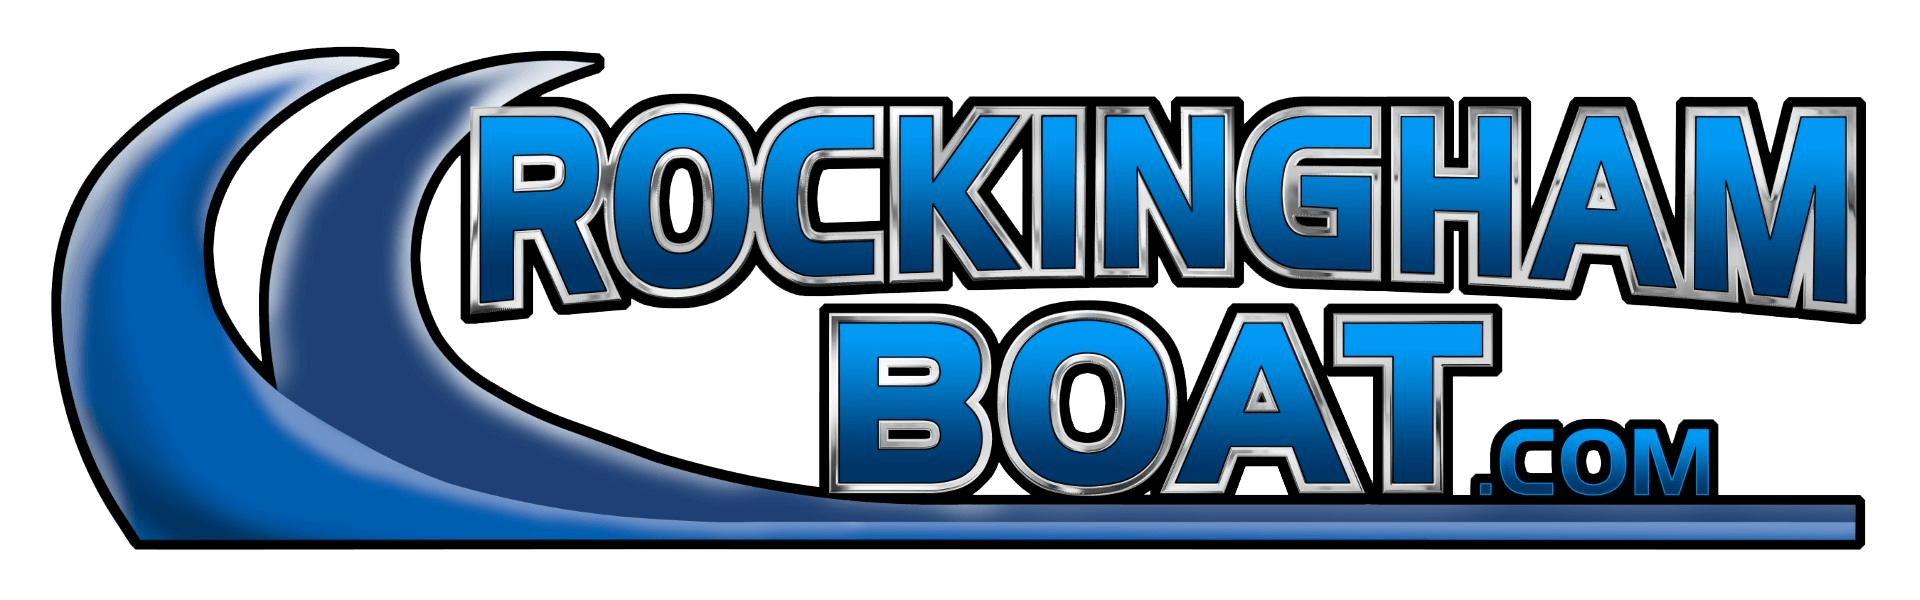 Rockingham Boat